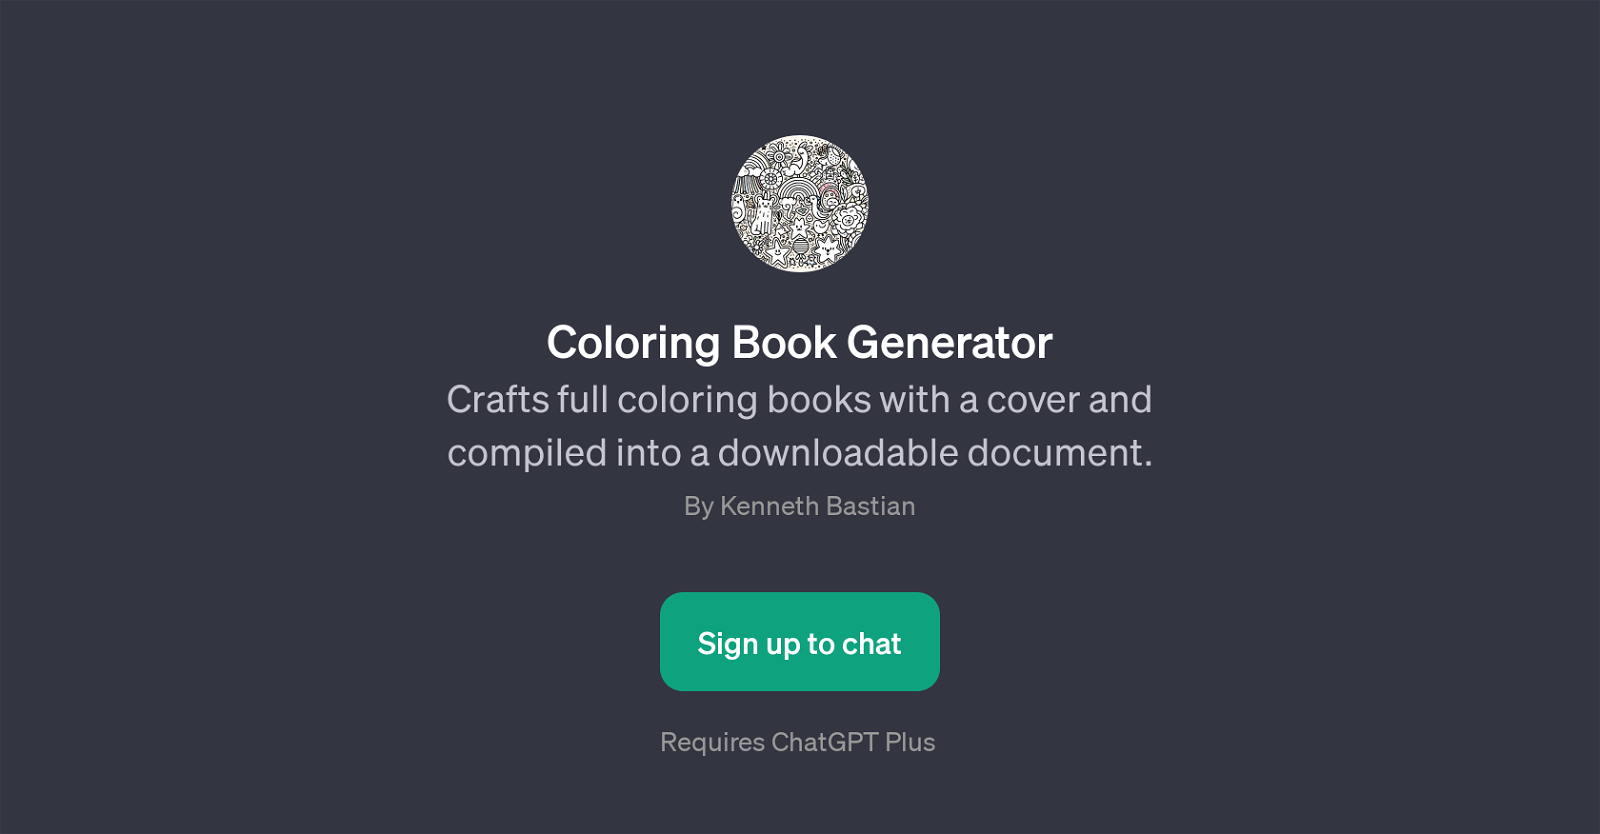 Coloring Book Generator website